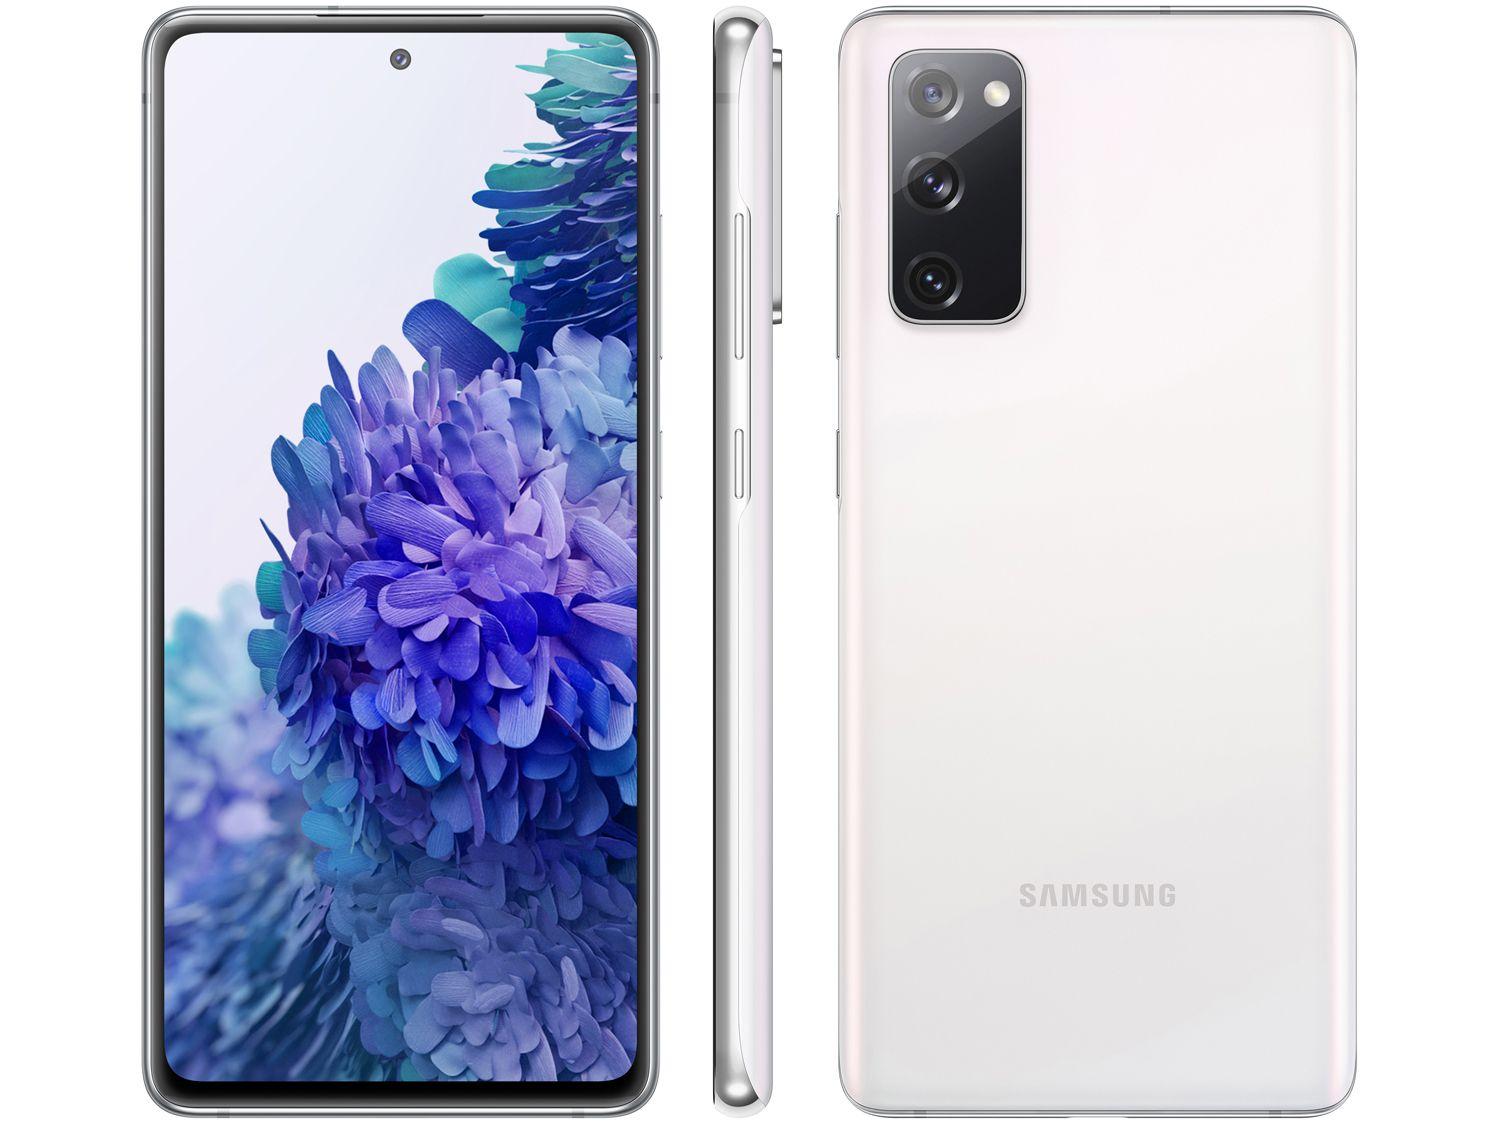 Smartphone Samsung Galaxy S20 FE 128GB Cloud White - 6GB